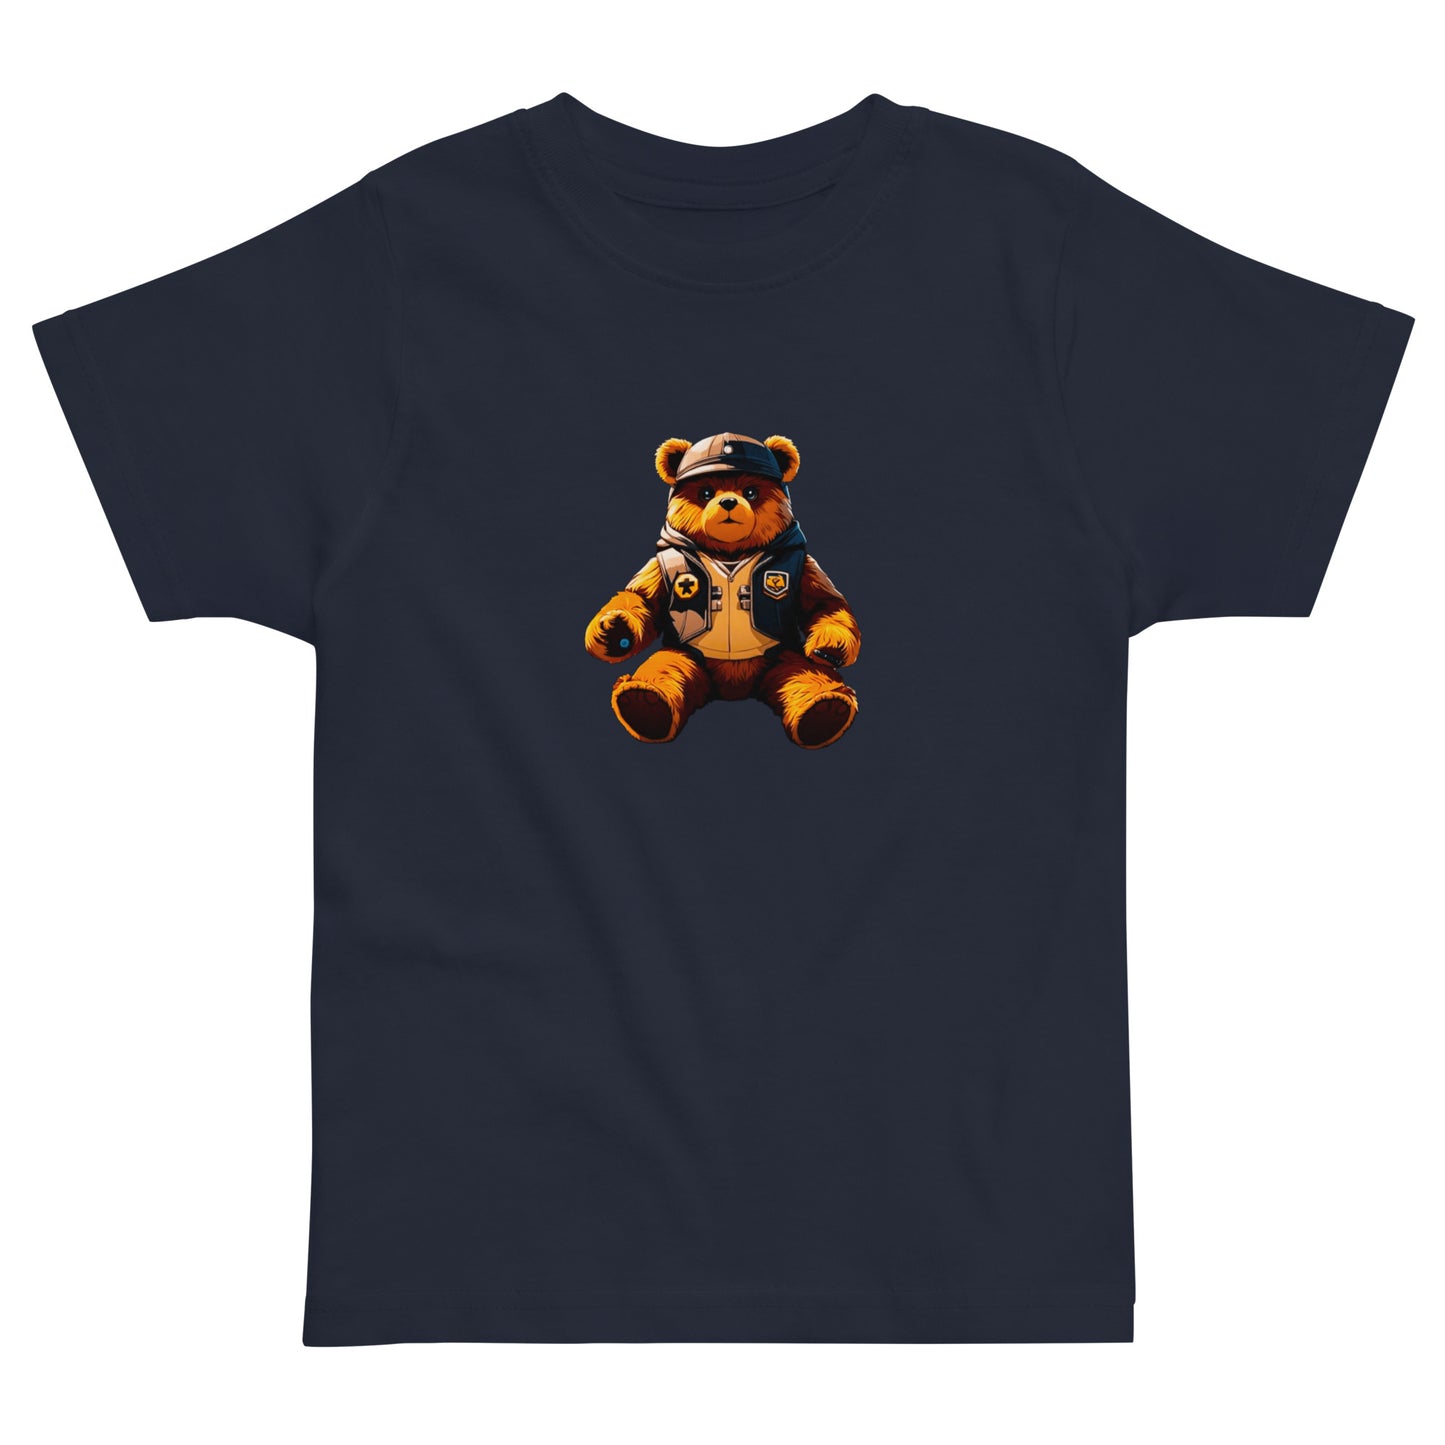 Toddler Bear t-shirt